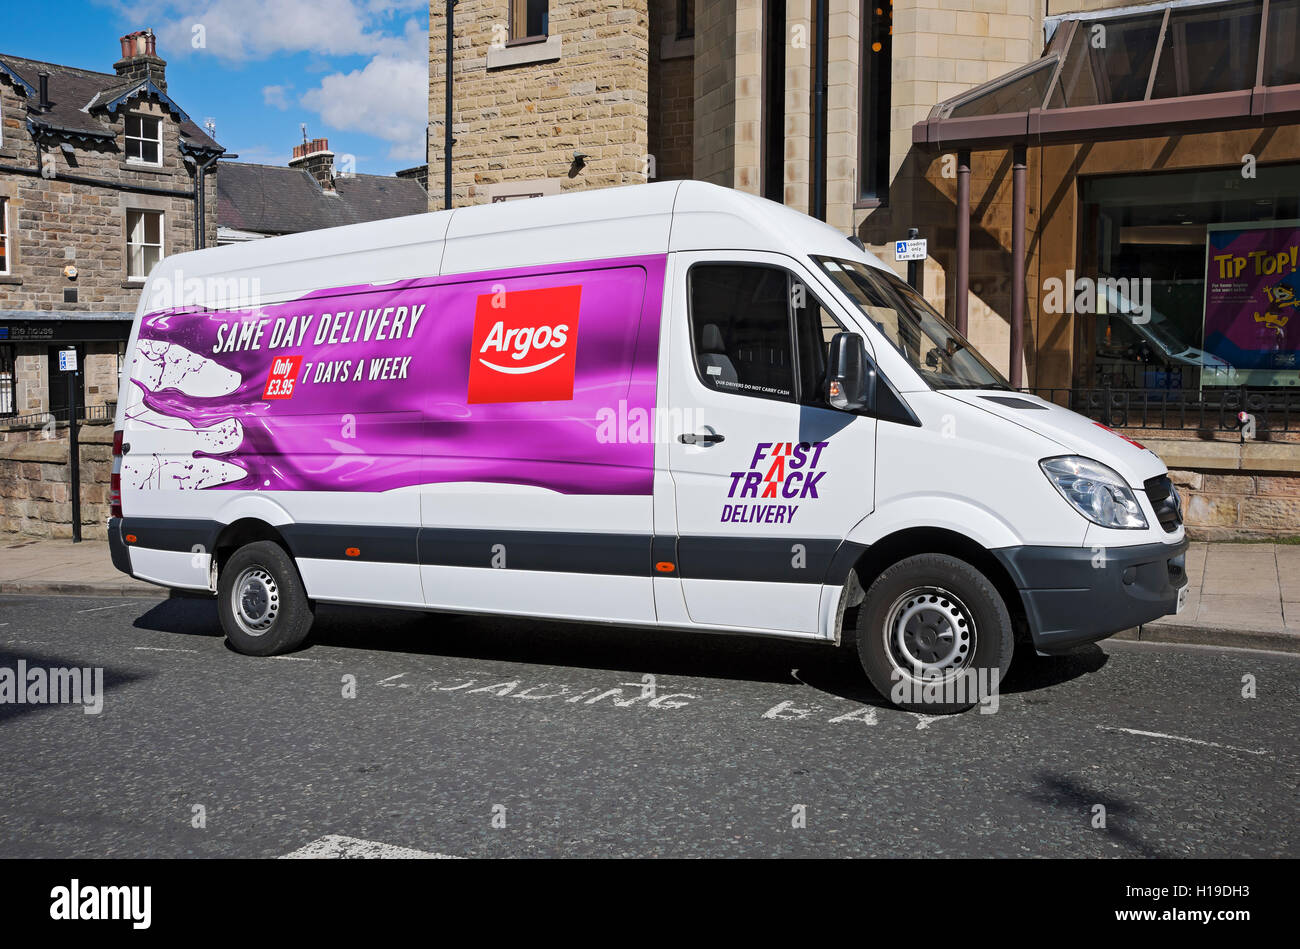 Argos fast track delivery van vehicle Harrogate North Yorkshire England UK United Kingdom GB Great Britain Stock Photo